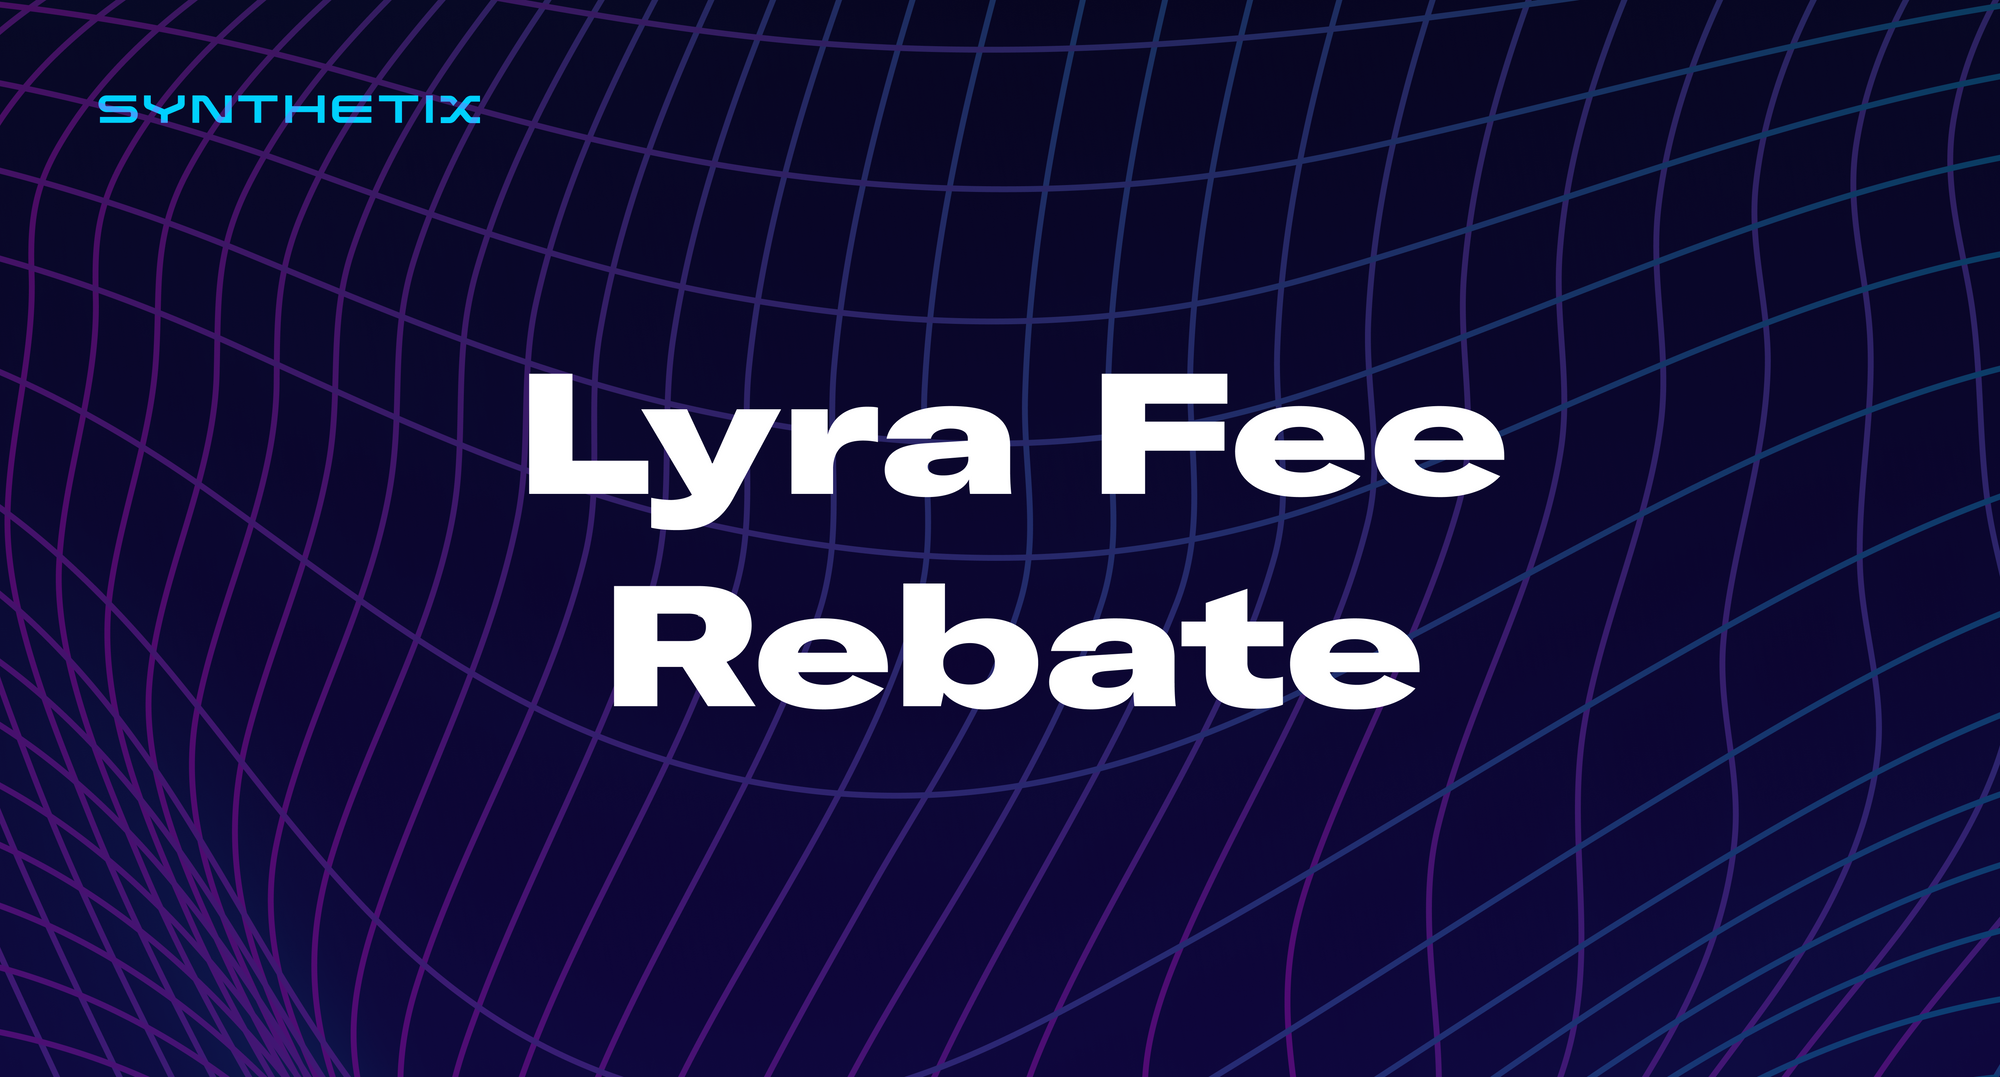 Lyra Fee Rebate